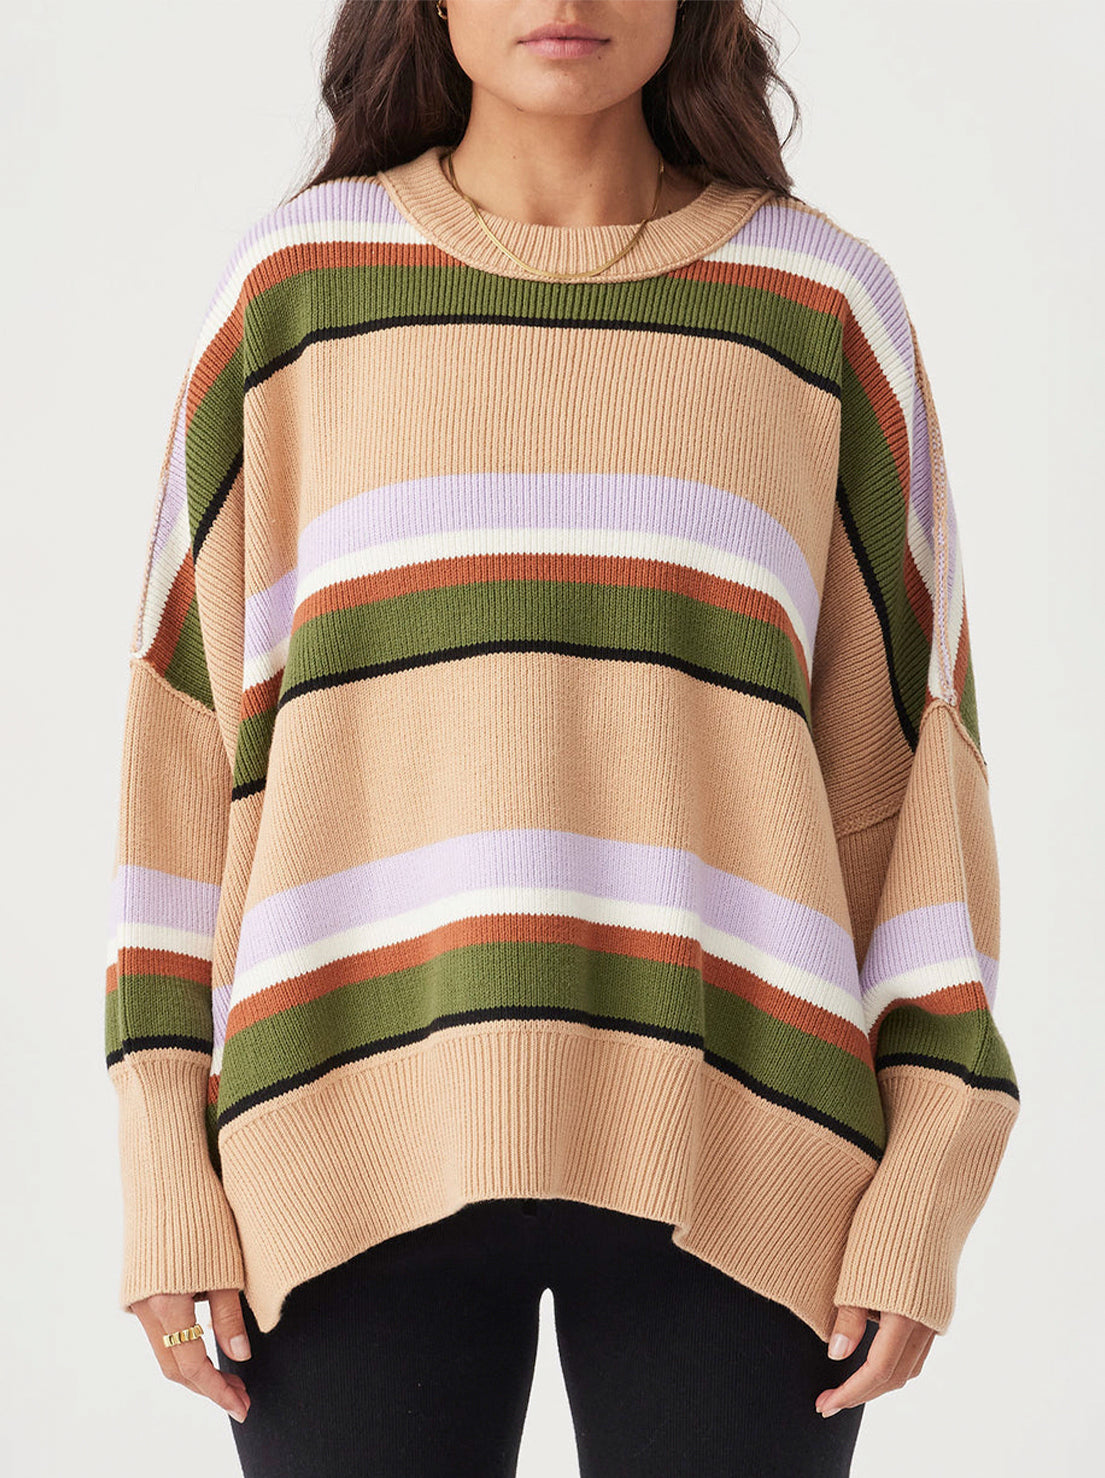 Arcaa Movement - Harper Stripe Organic Knit Sweater - Honey, Lilac & Cream